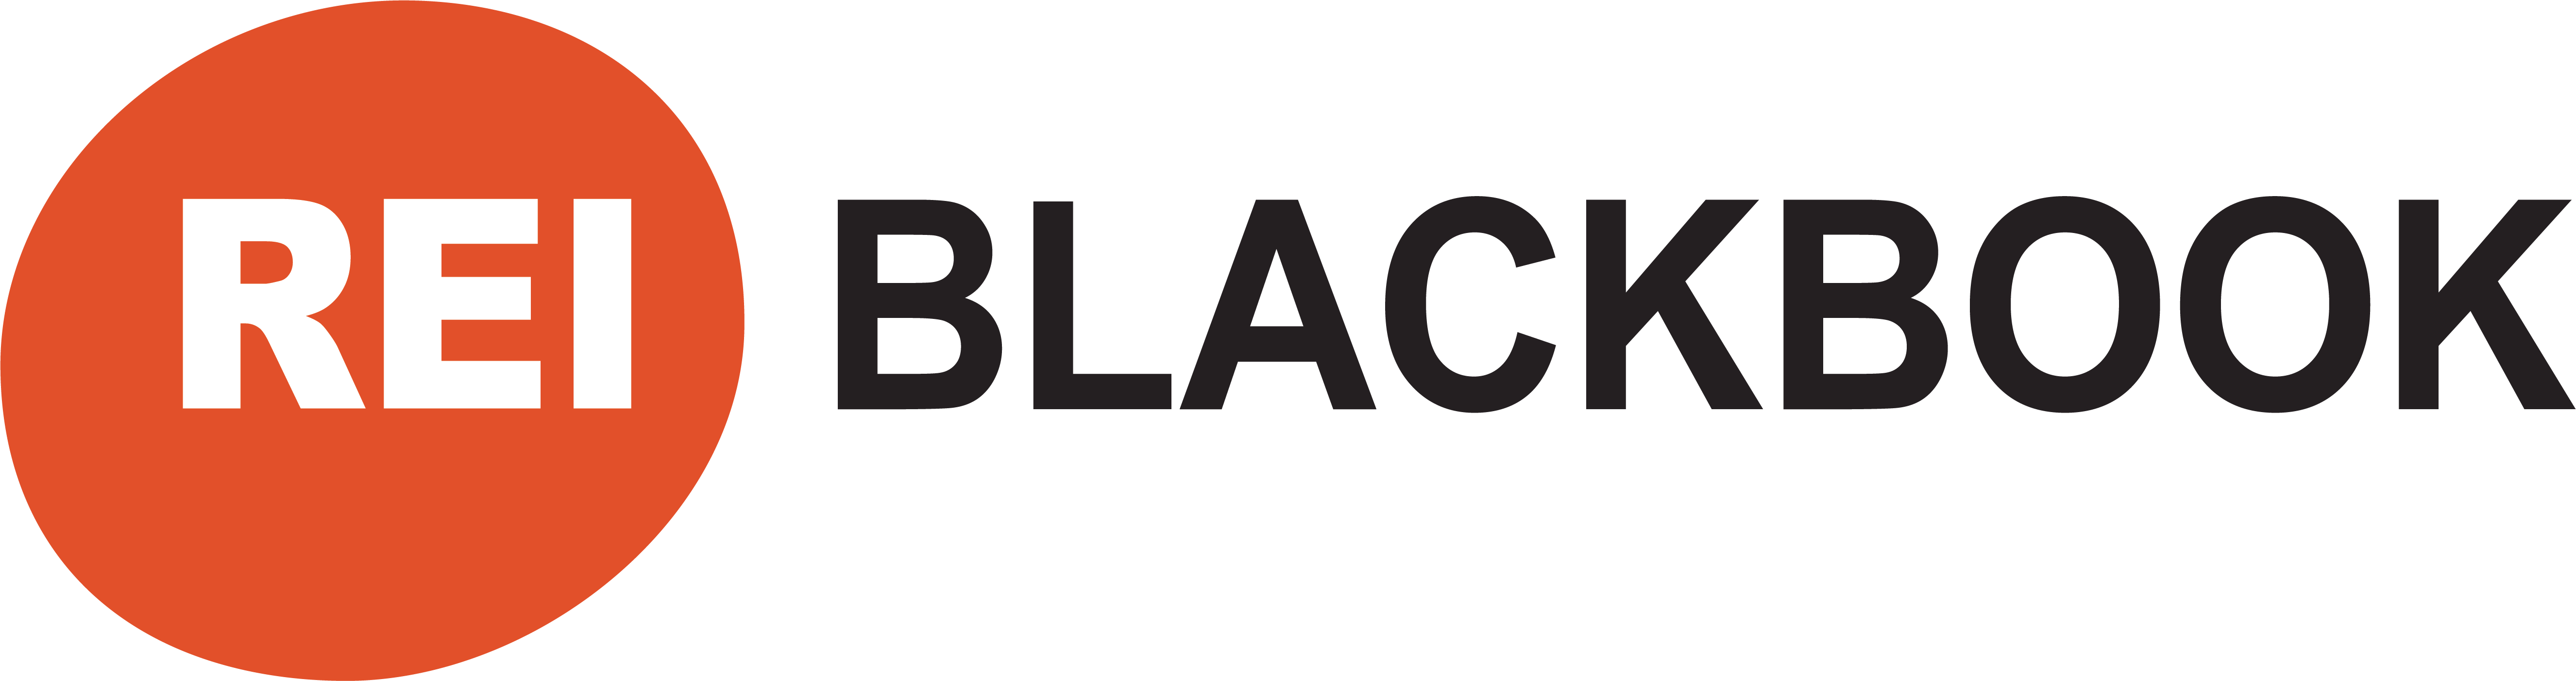 REI BlackBook